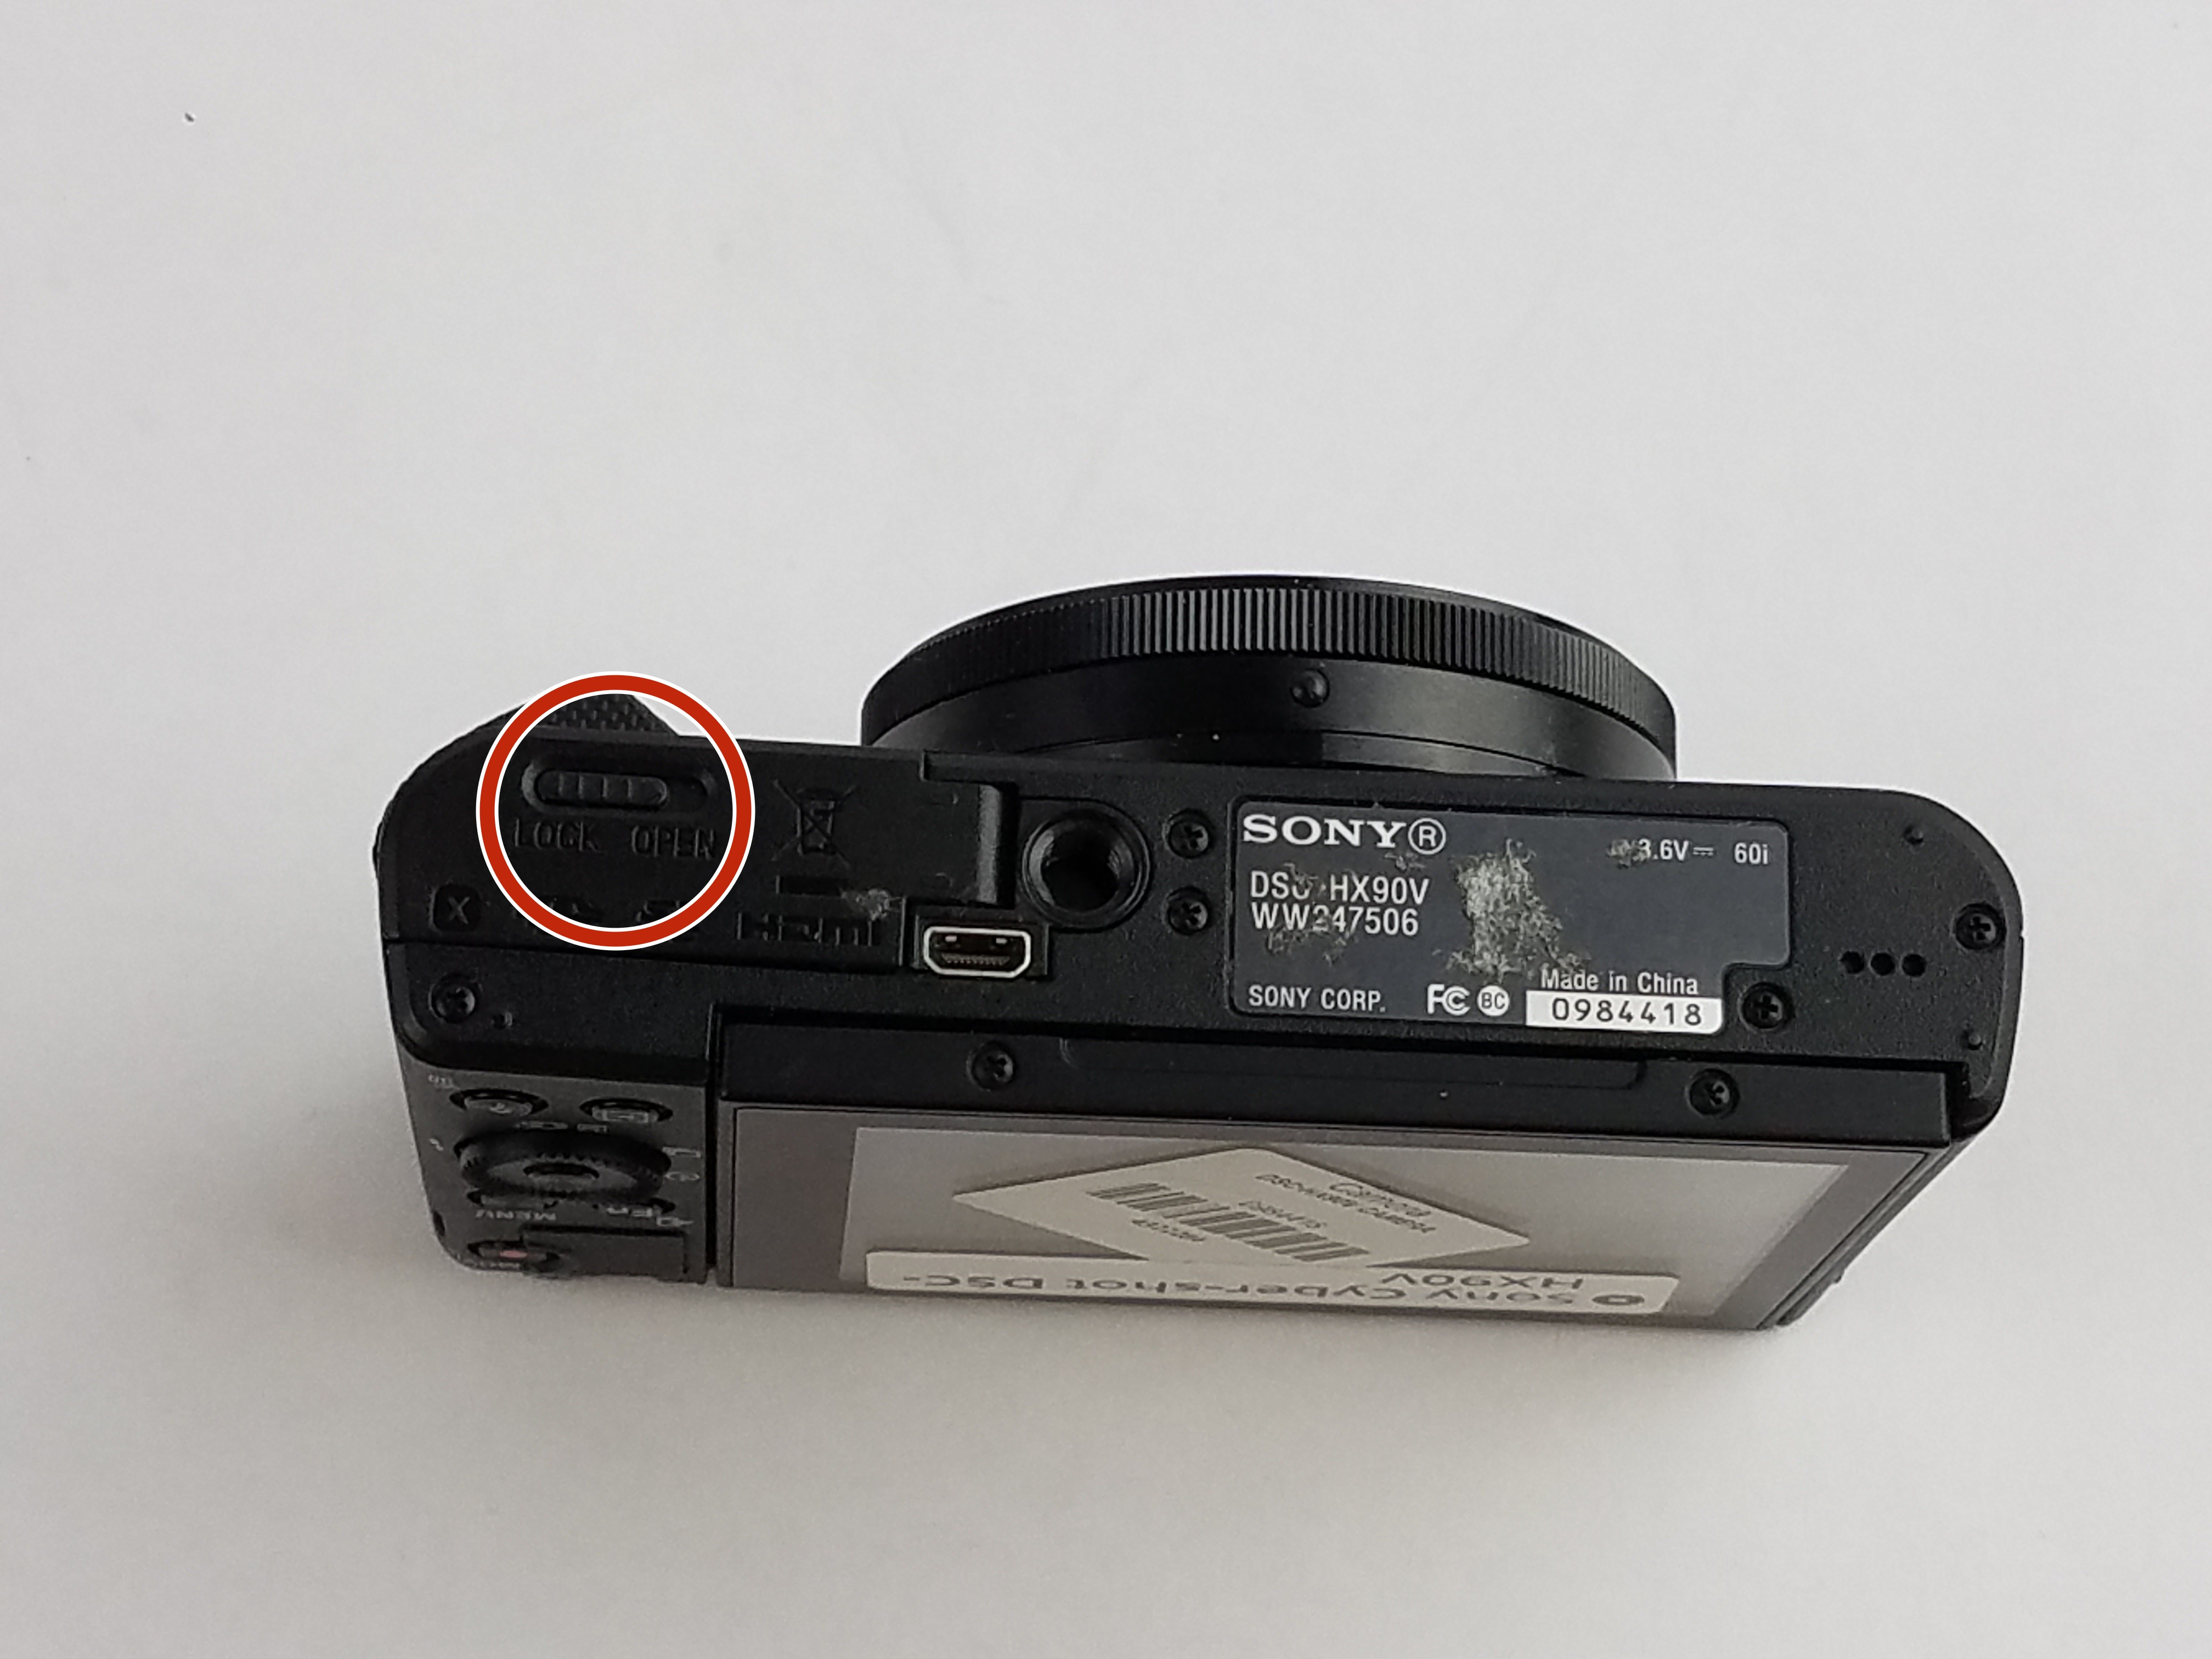 Sony dsc hx90v help guide